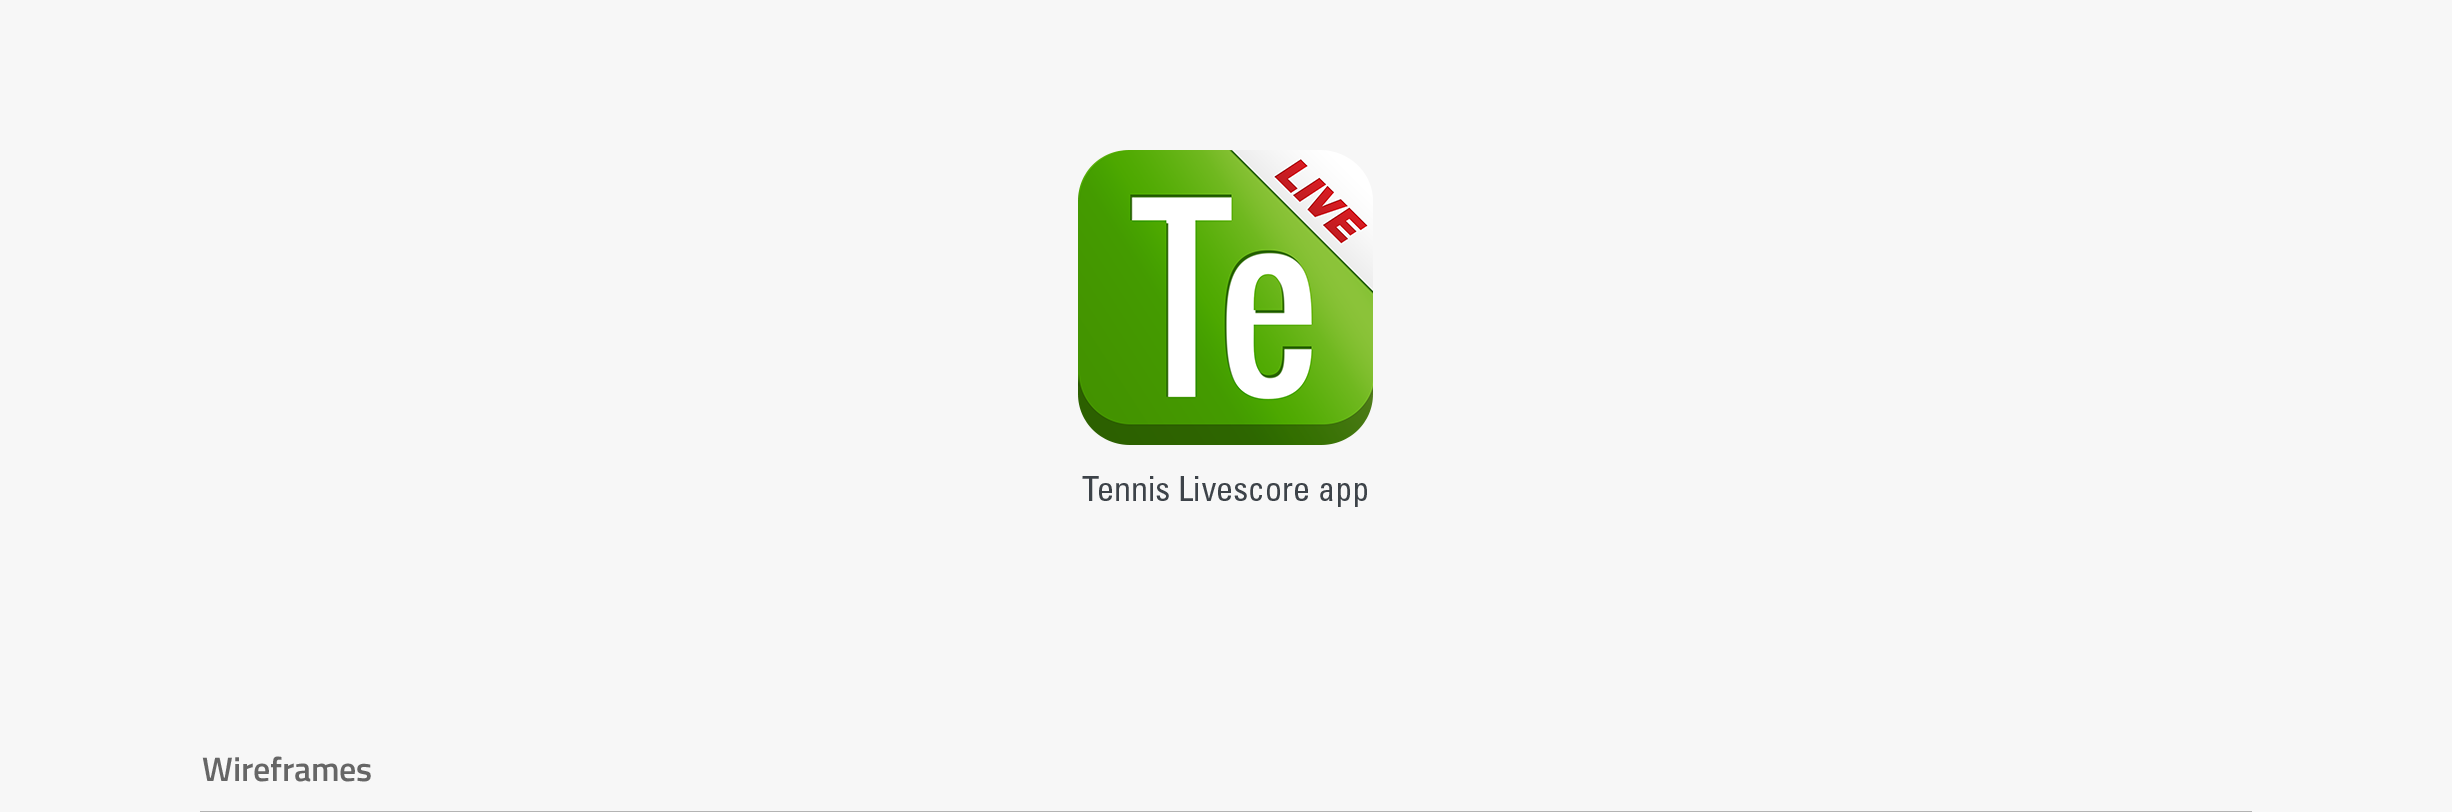 Tennis livescore - app icon